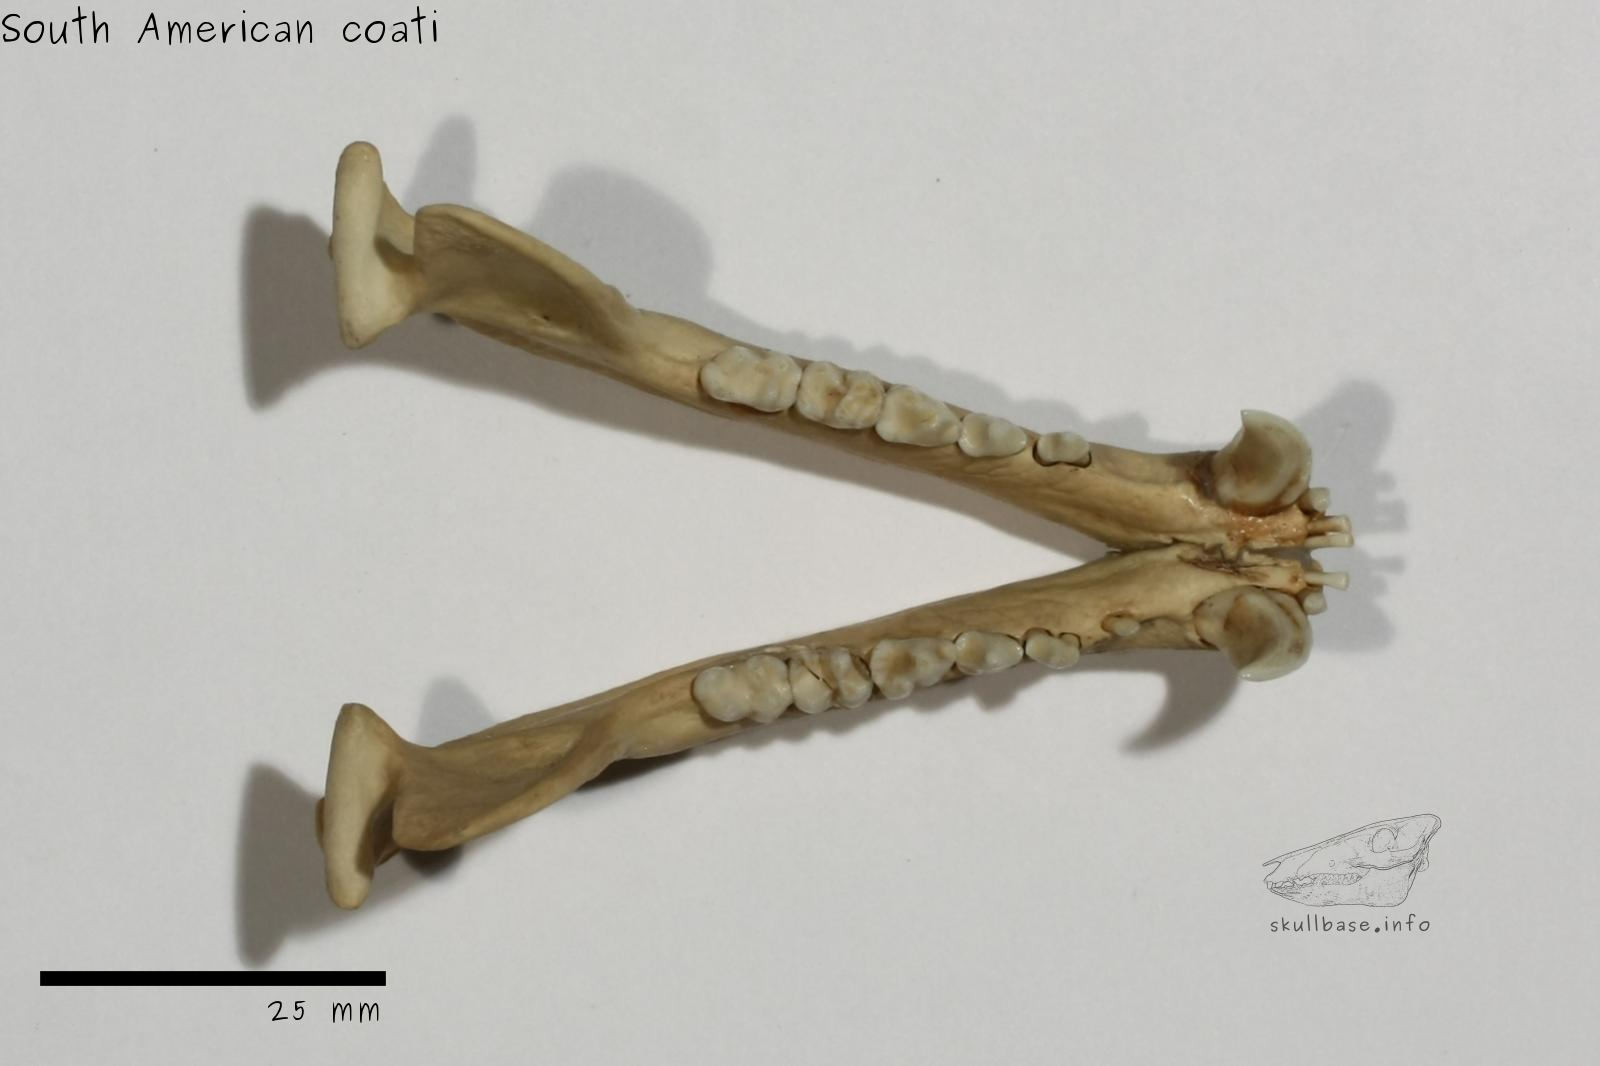 South American coati (Nasua nasua) jaw